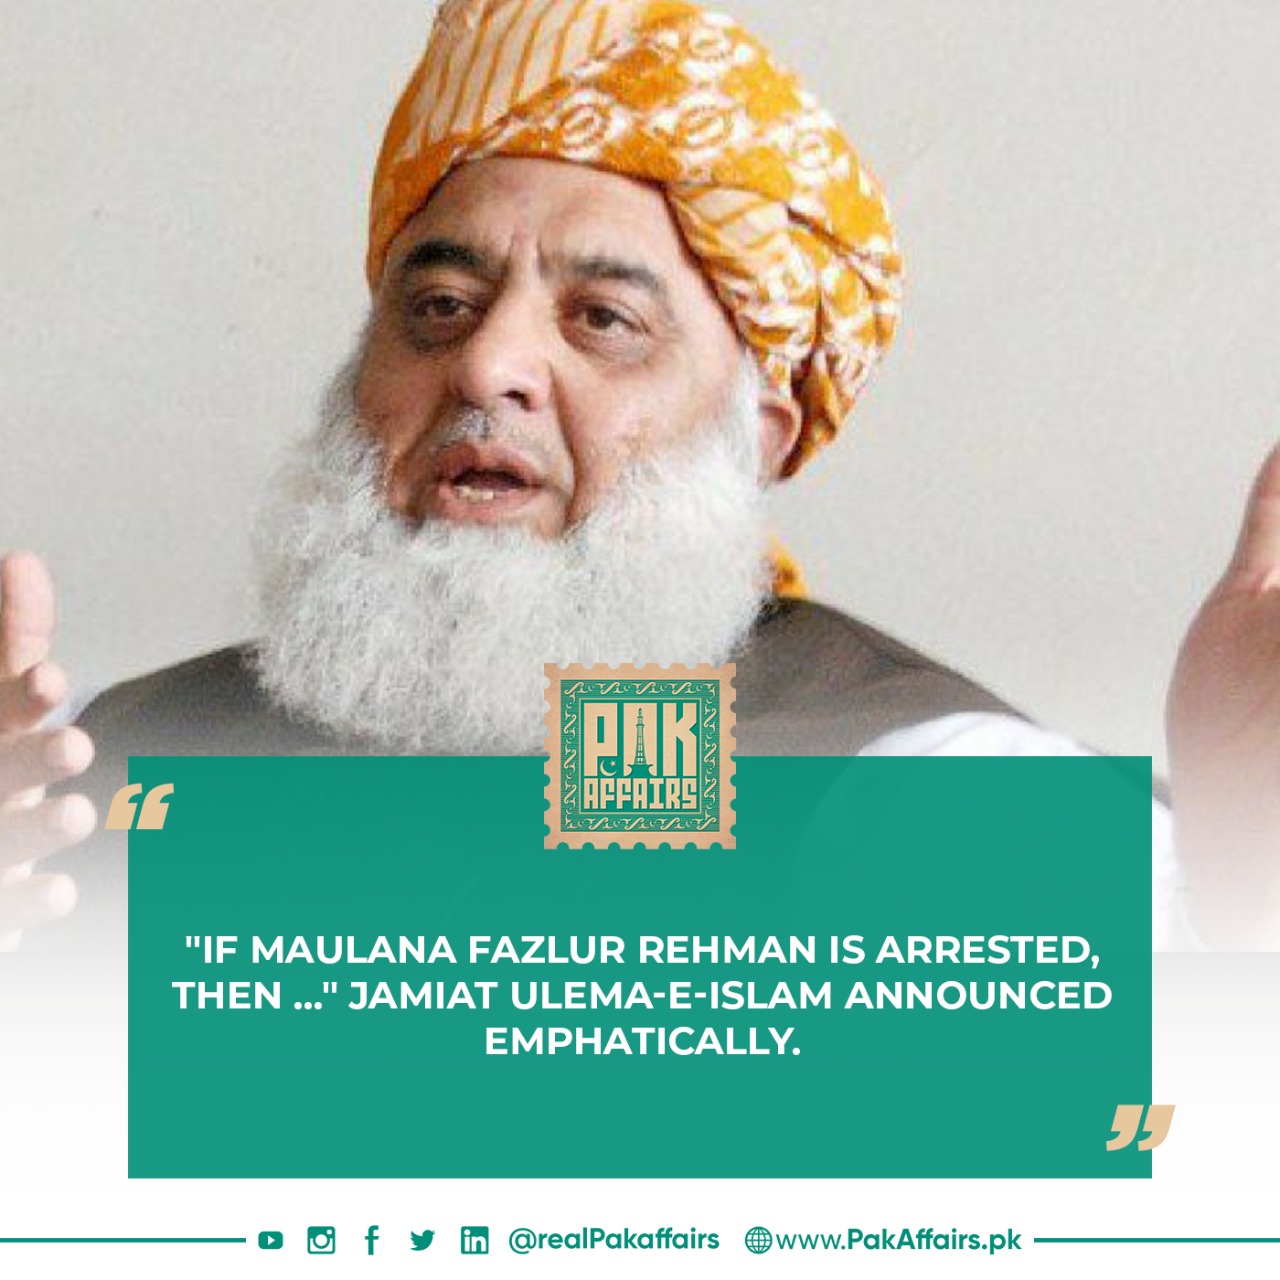 "If Maulana Fazlur Rehman is arrested, then ..." Jamiat Ulema-e-Islam announced emphatically